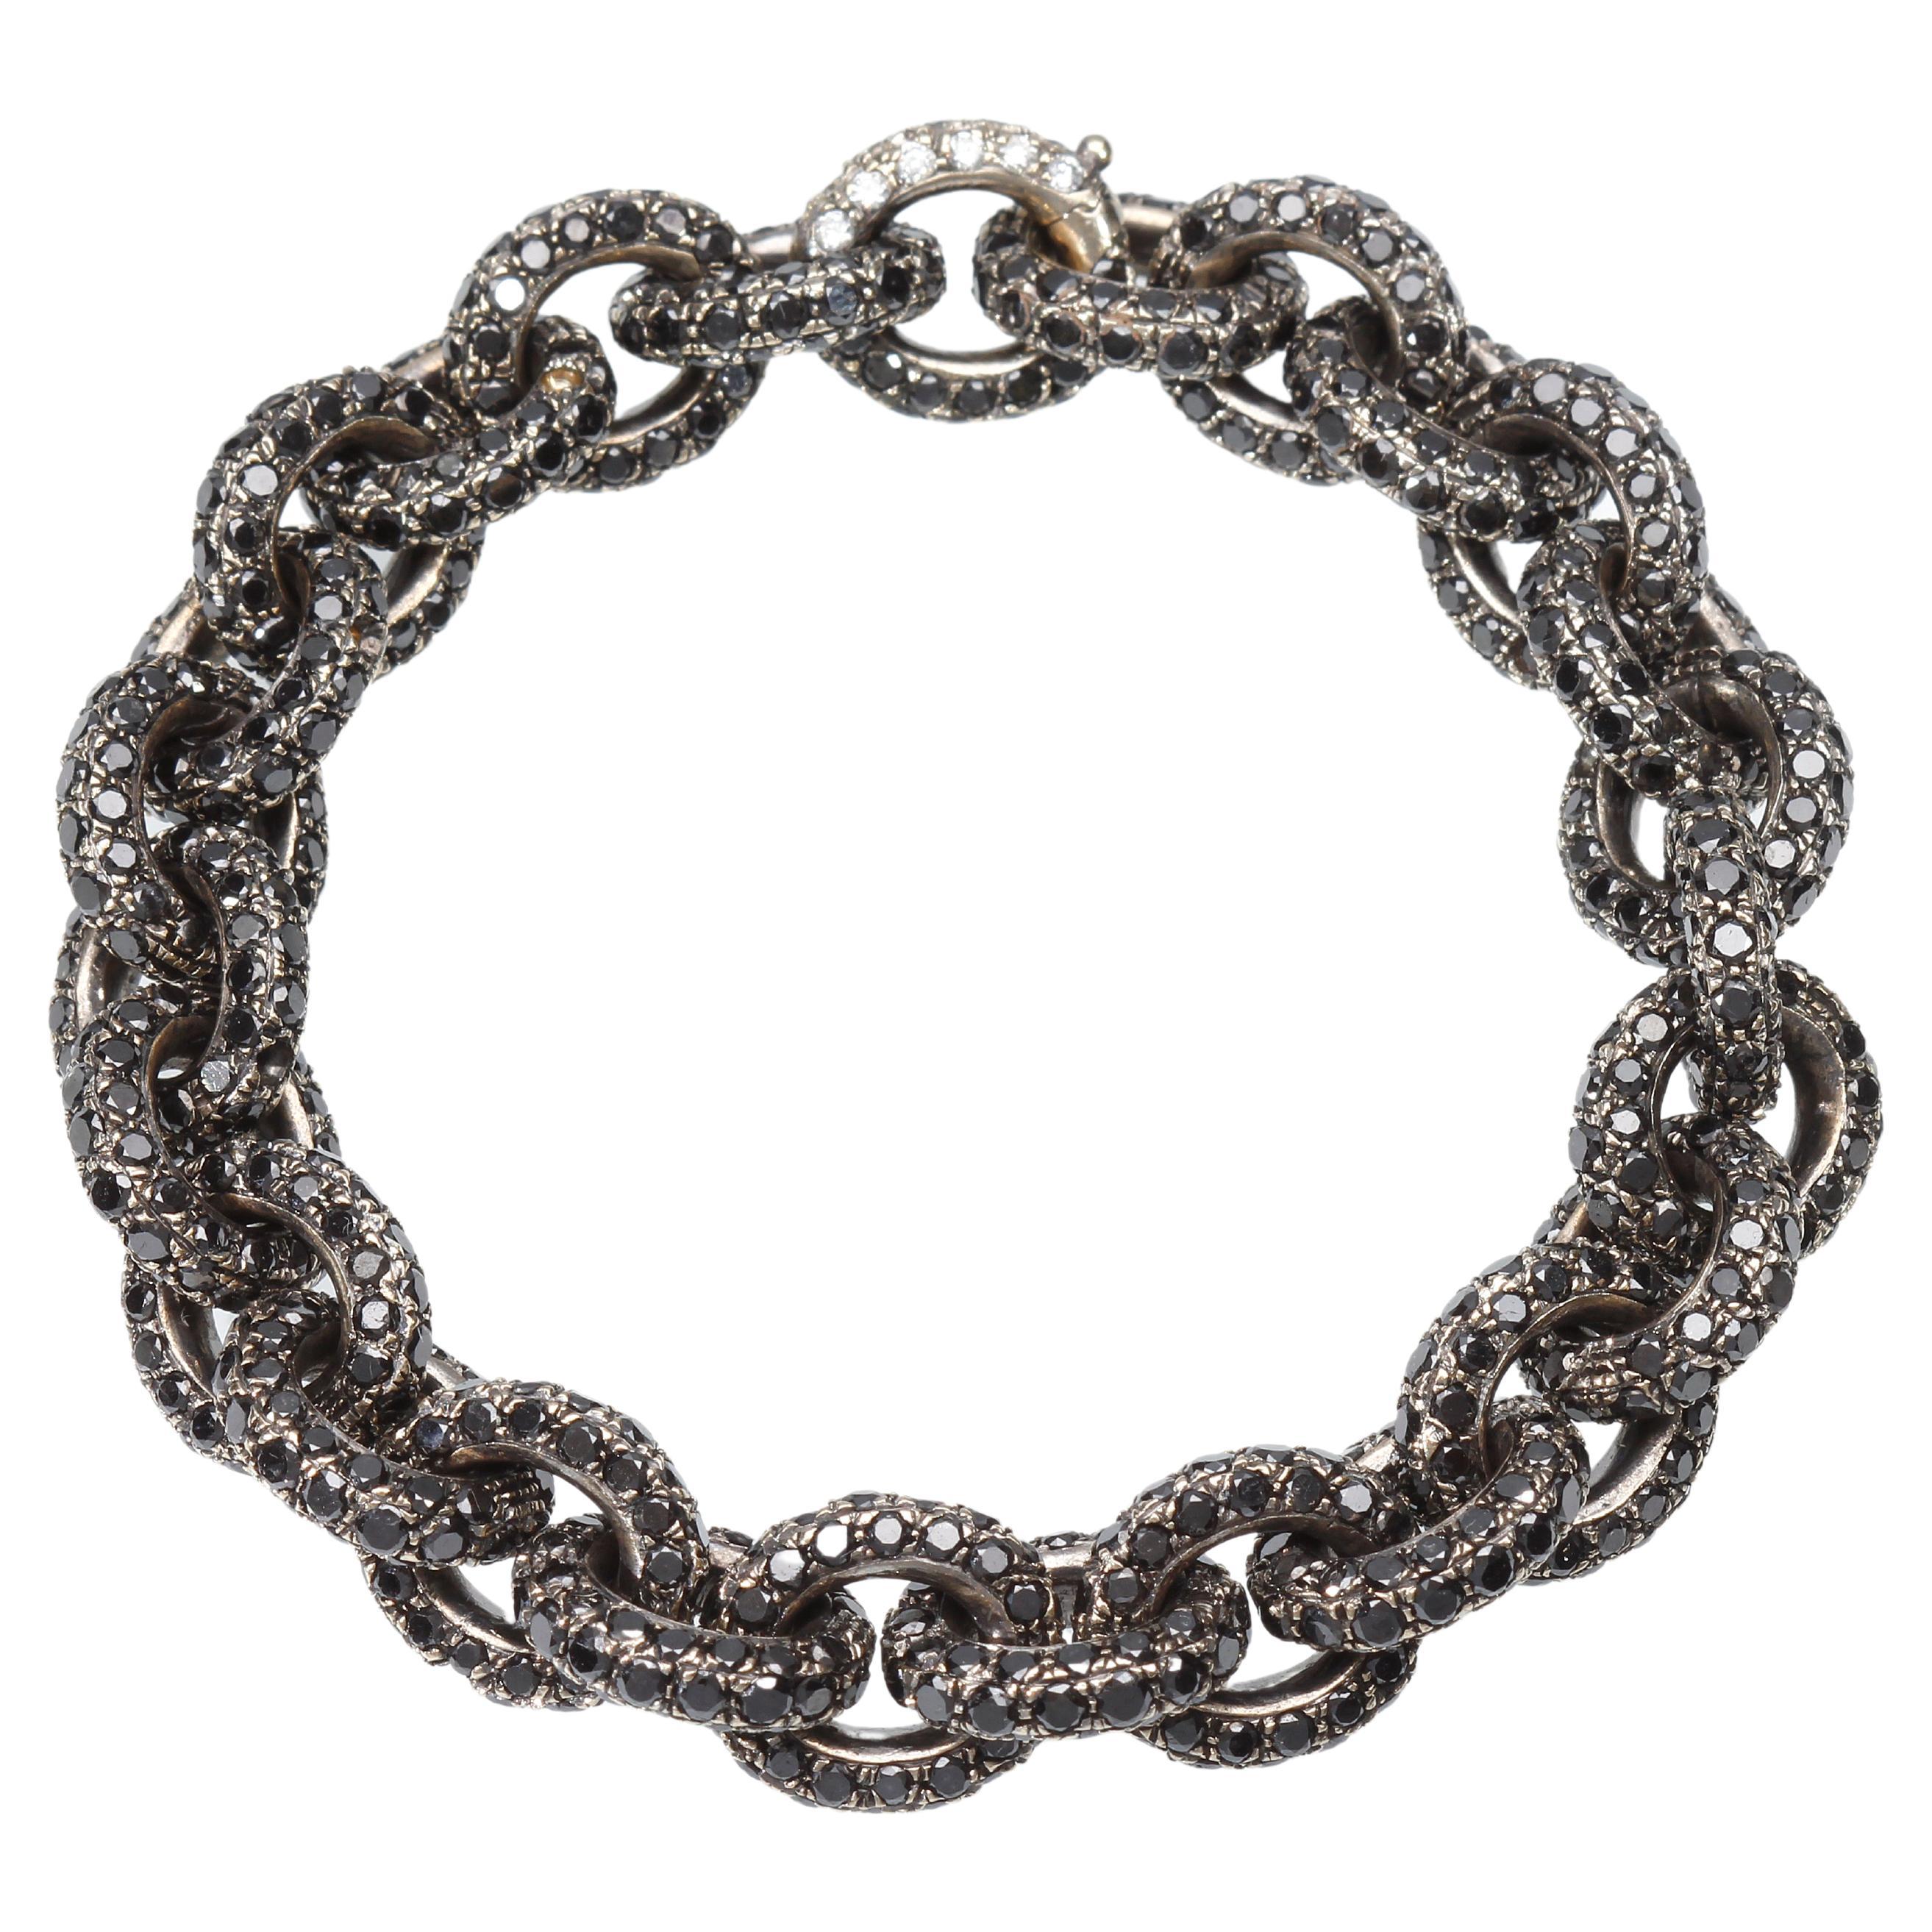 Chain Bracelet with 33.50 Ct of Black Diamonds. Single Piece. Handmade